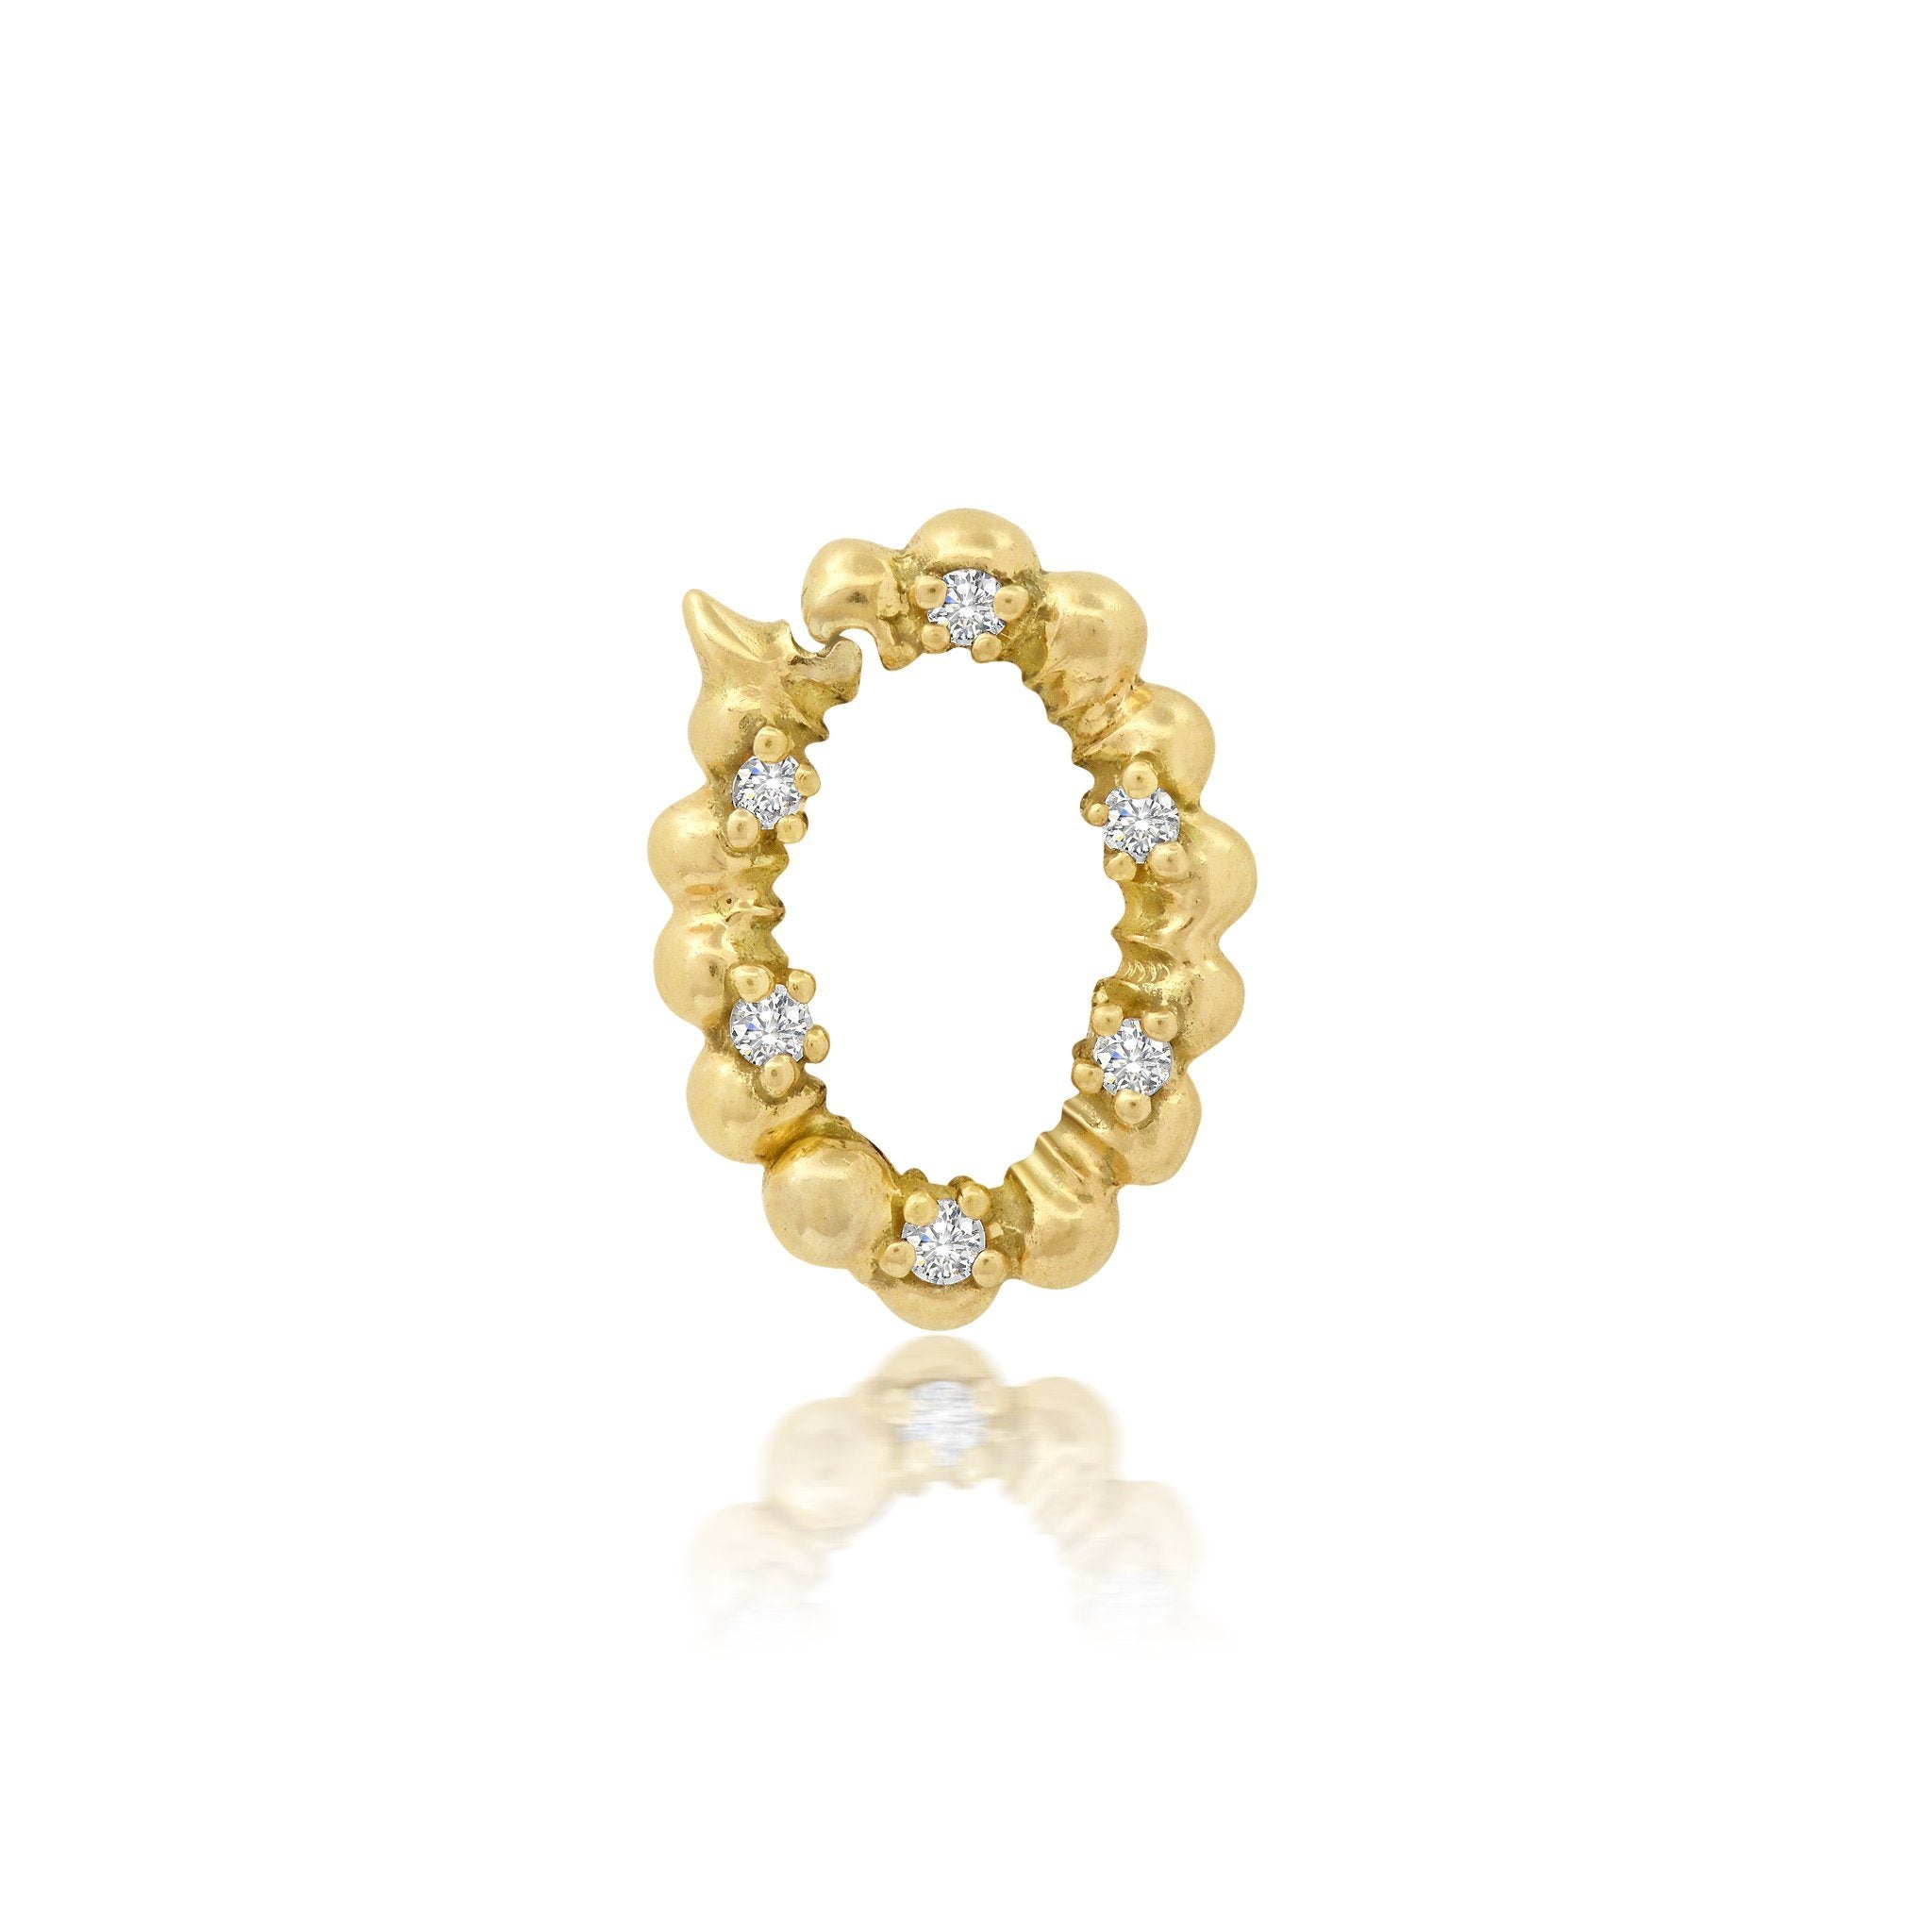 NEW Oval Diamond Soleil Element Jewelry Bayou with Love 